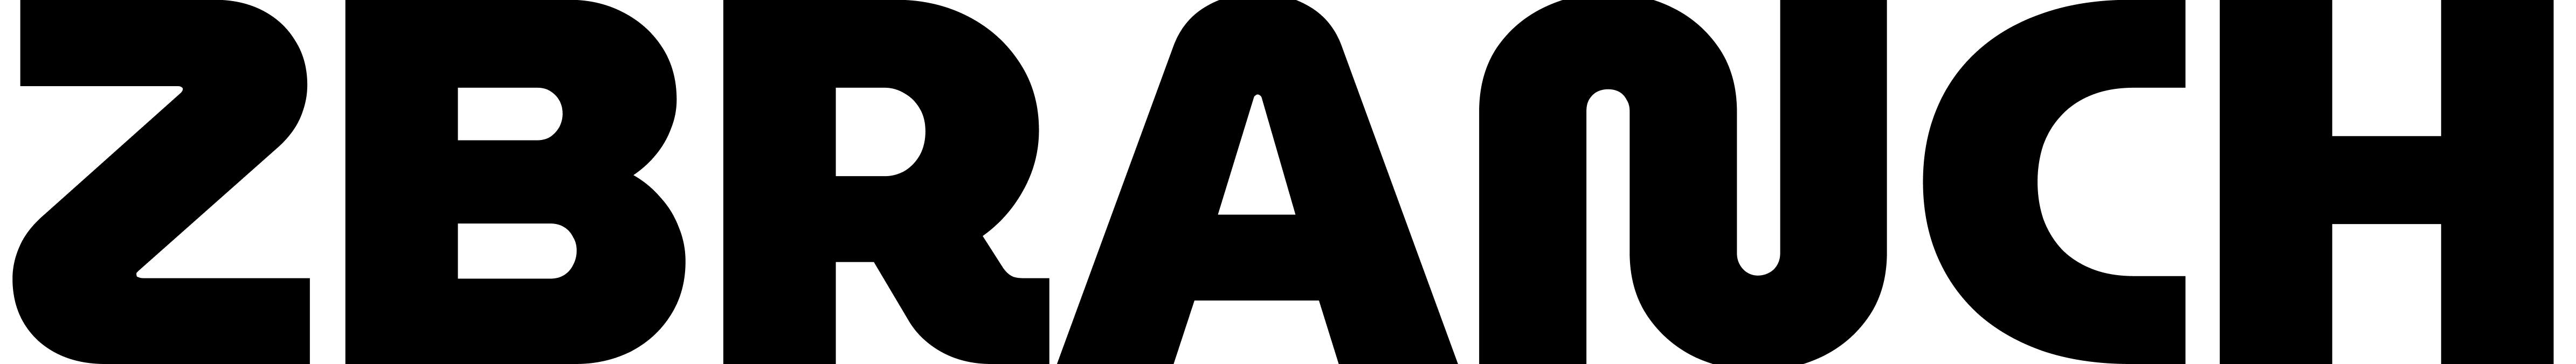 logo zbranch